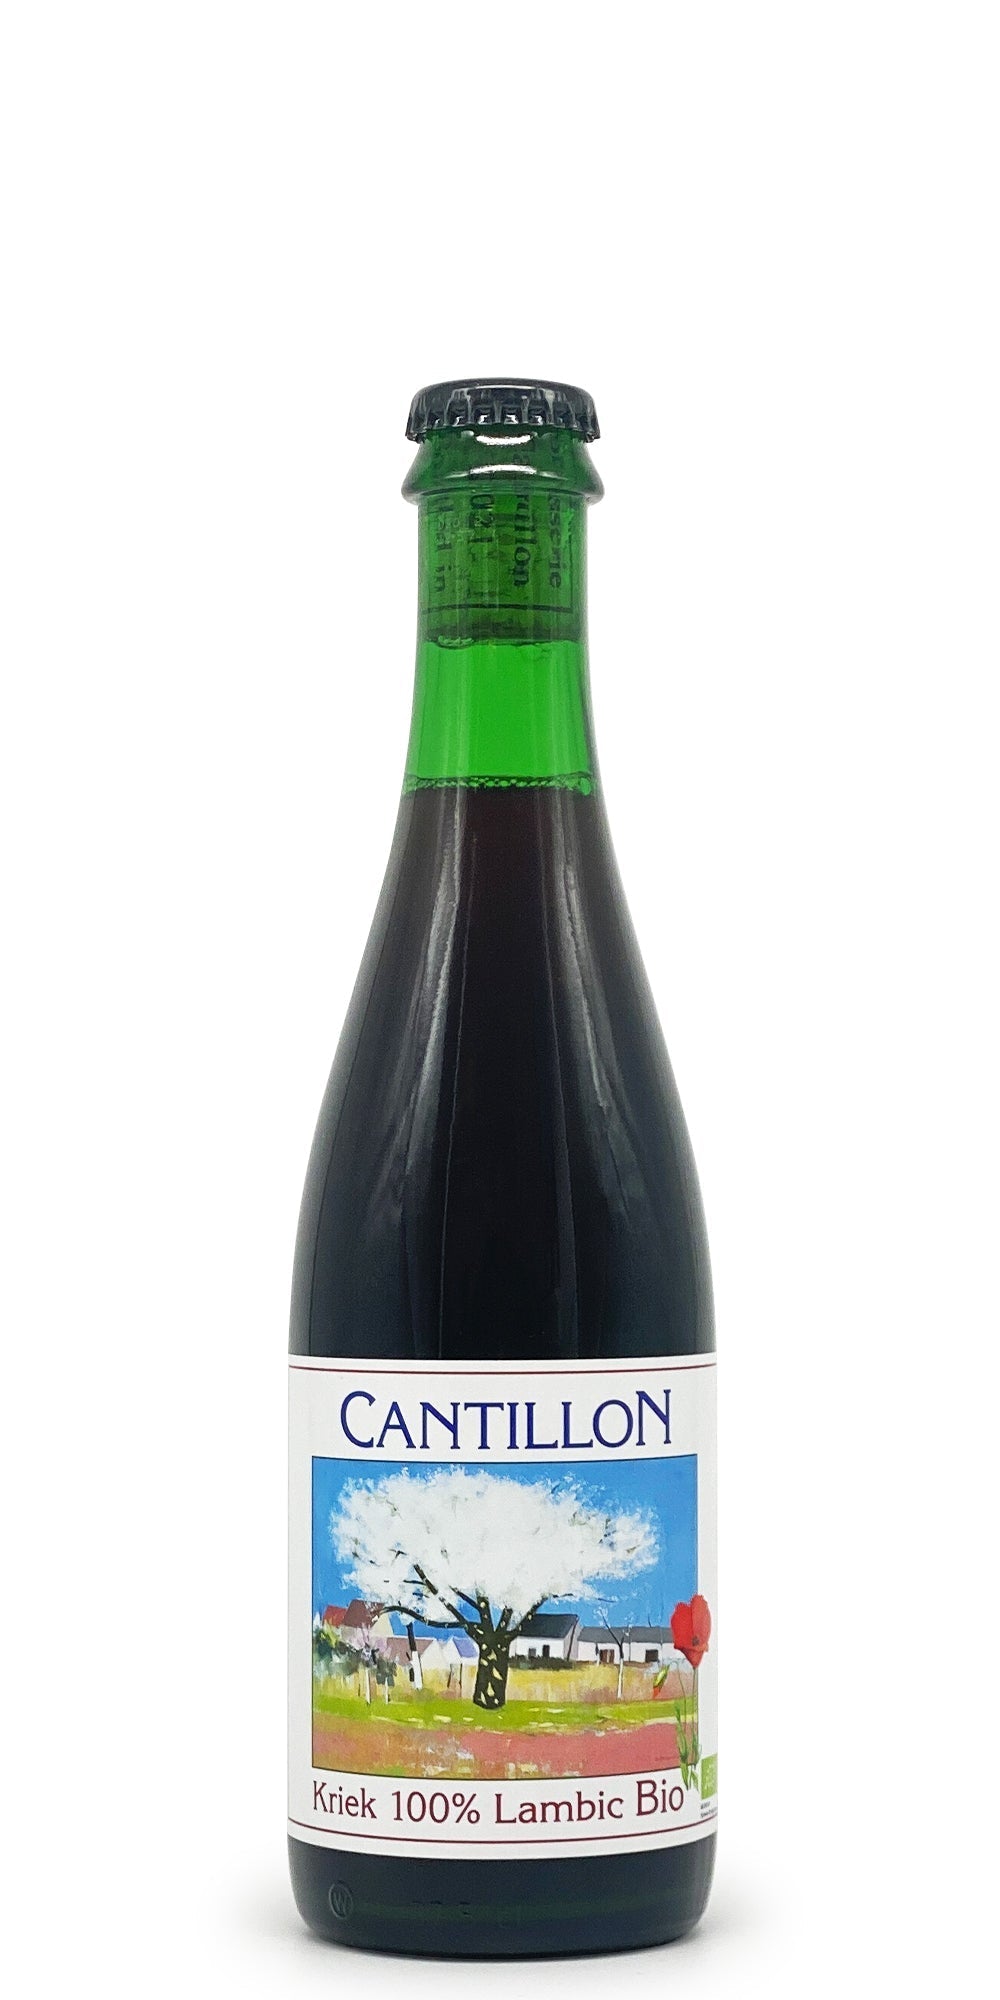 Cantillon - Kriek (2017)